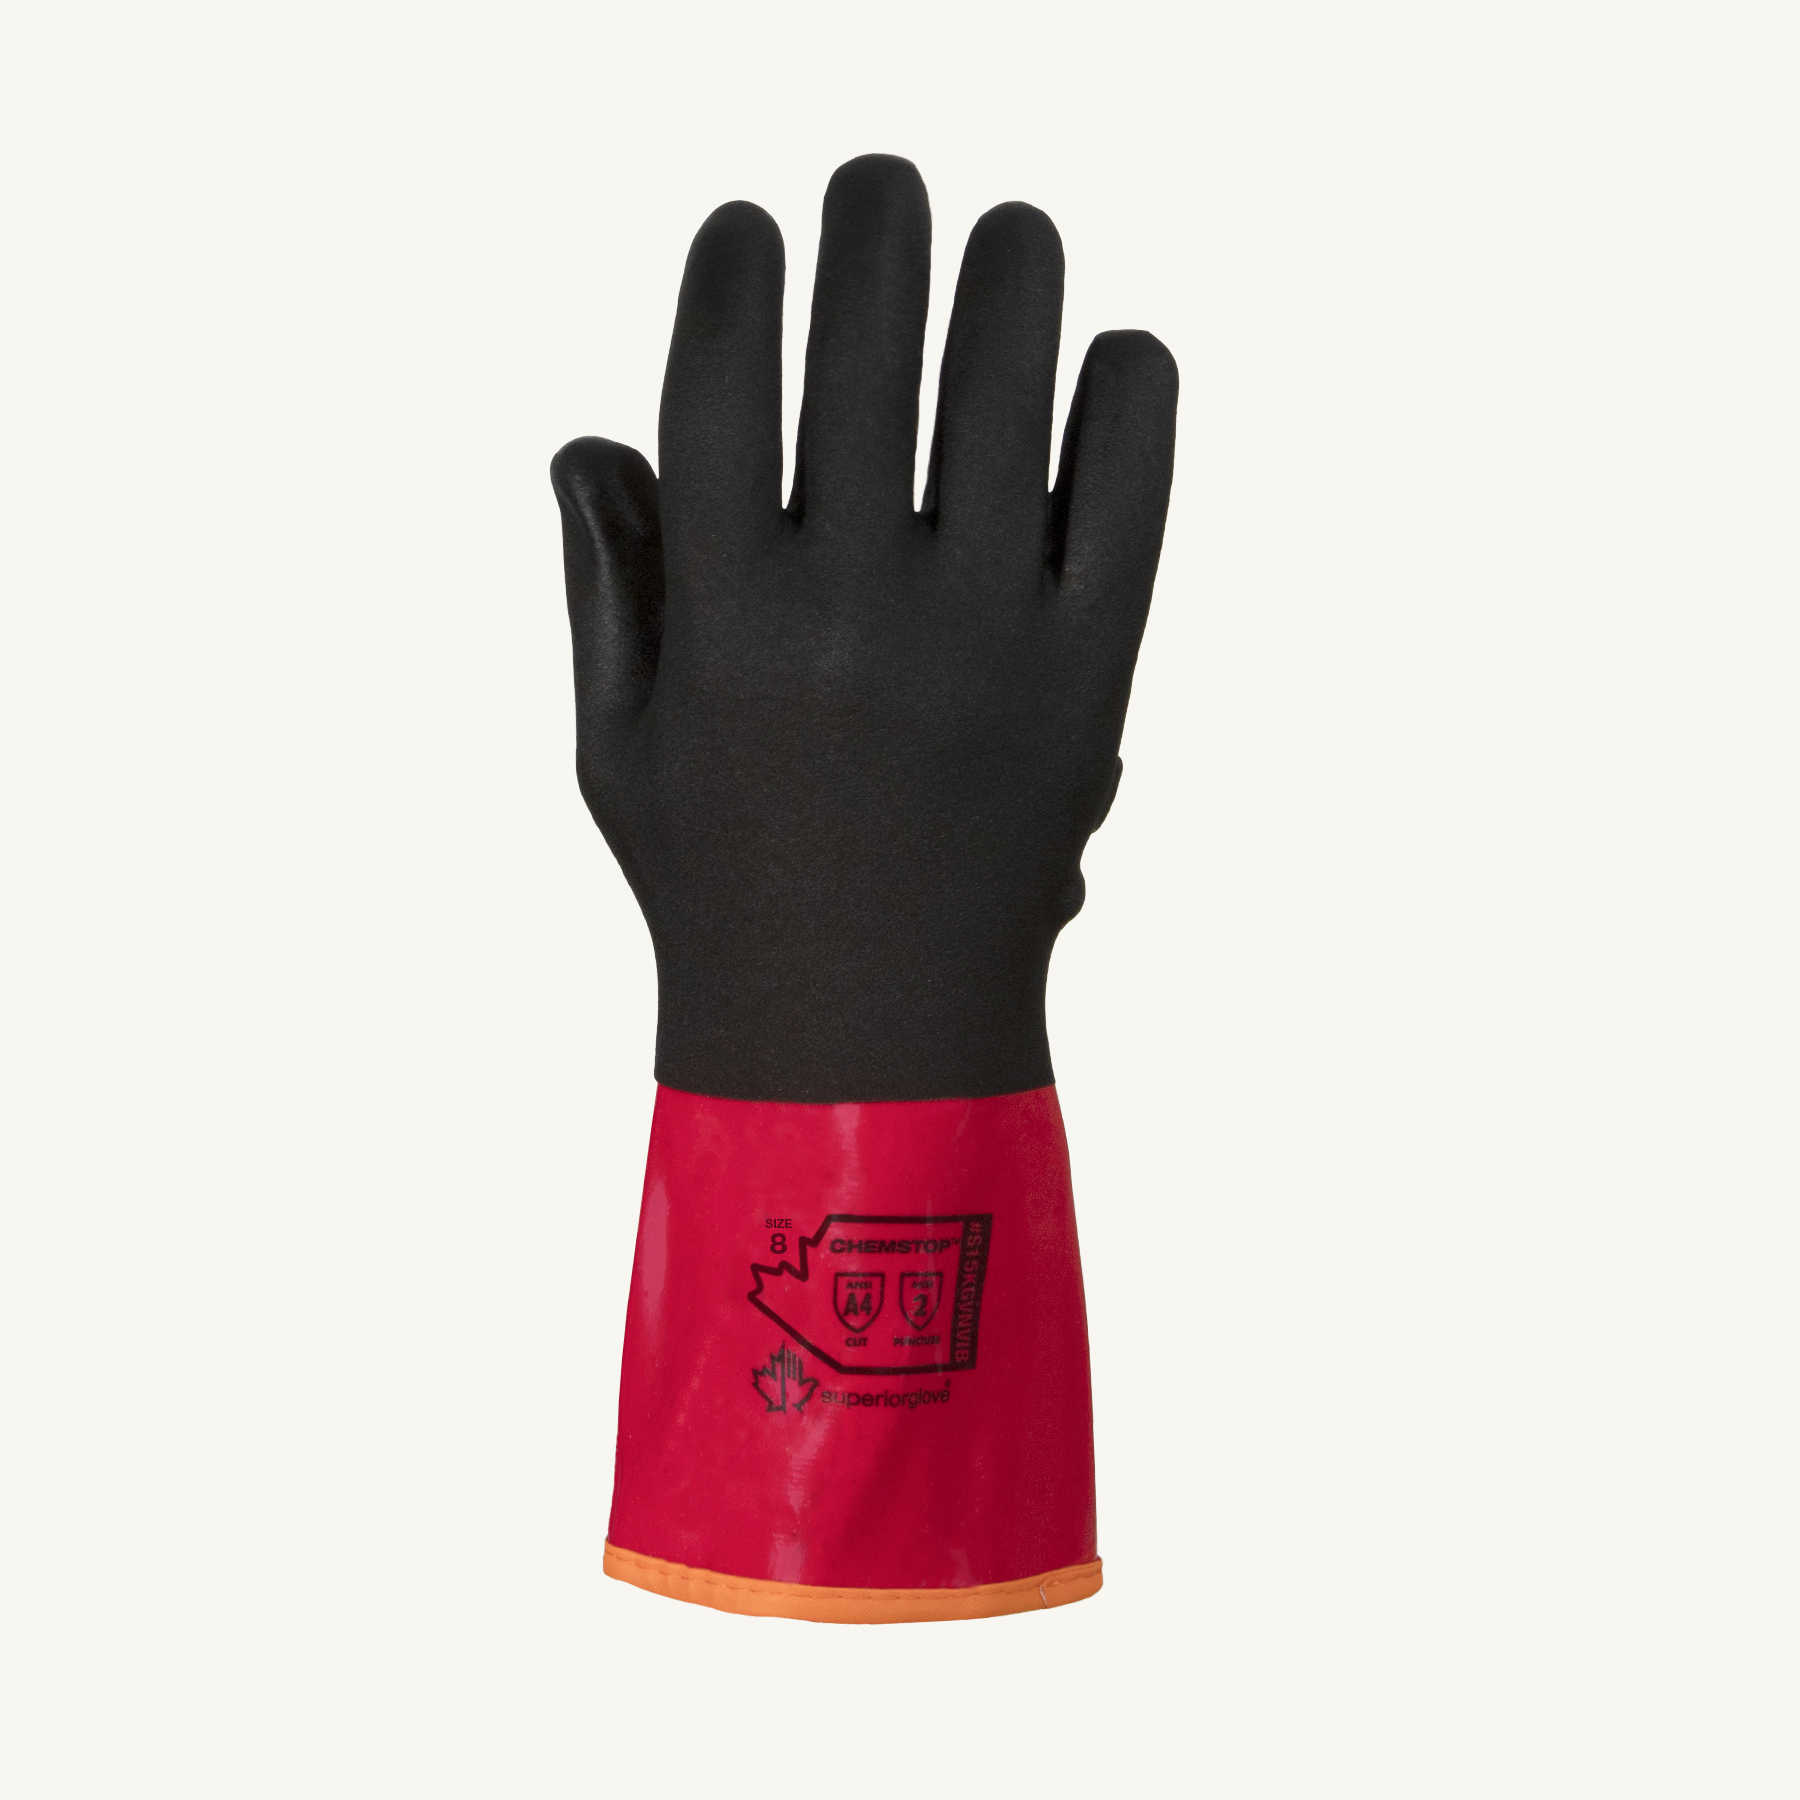 Chemstop? Anti-Vibration PVC Gloves With Aramid Fiber And Full Nitrile Coating